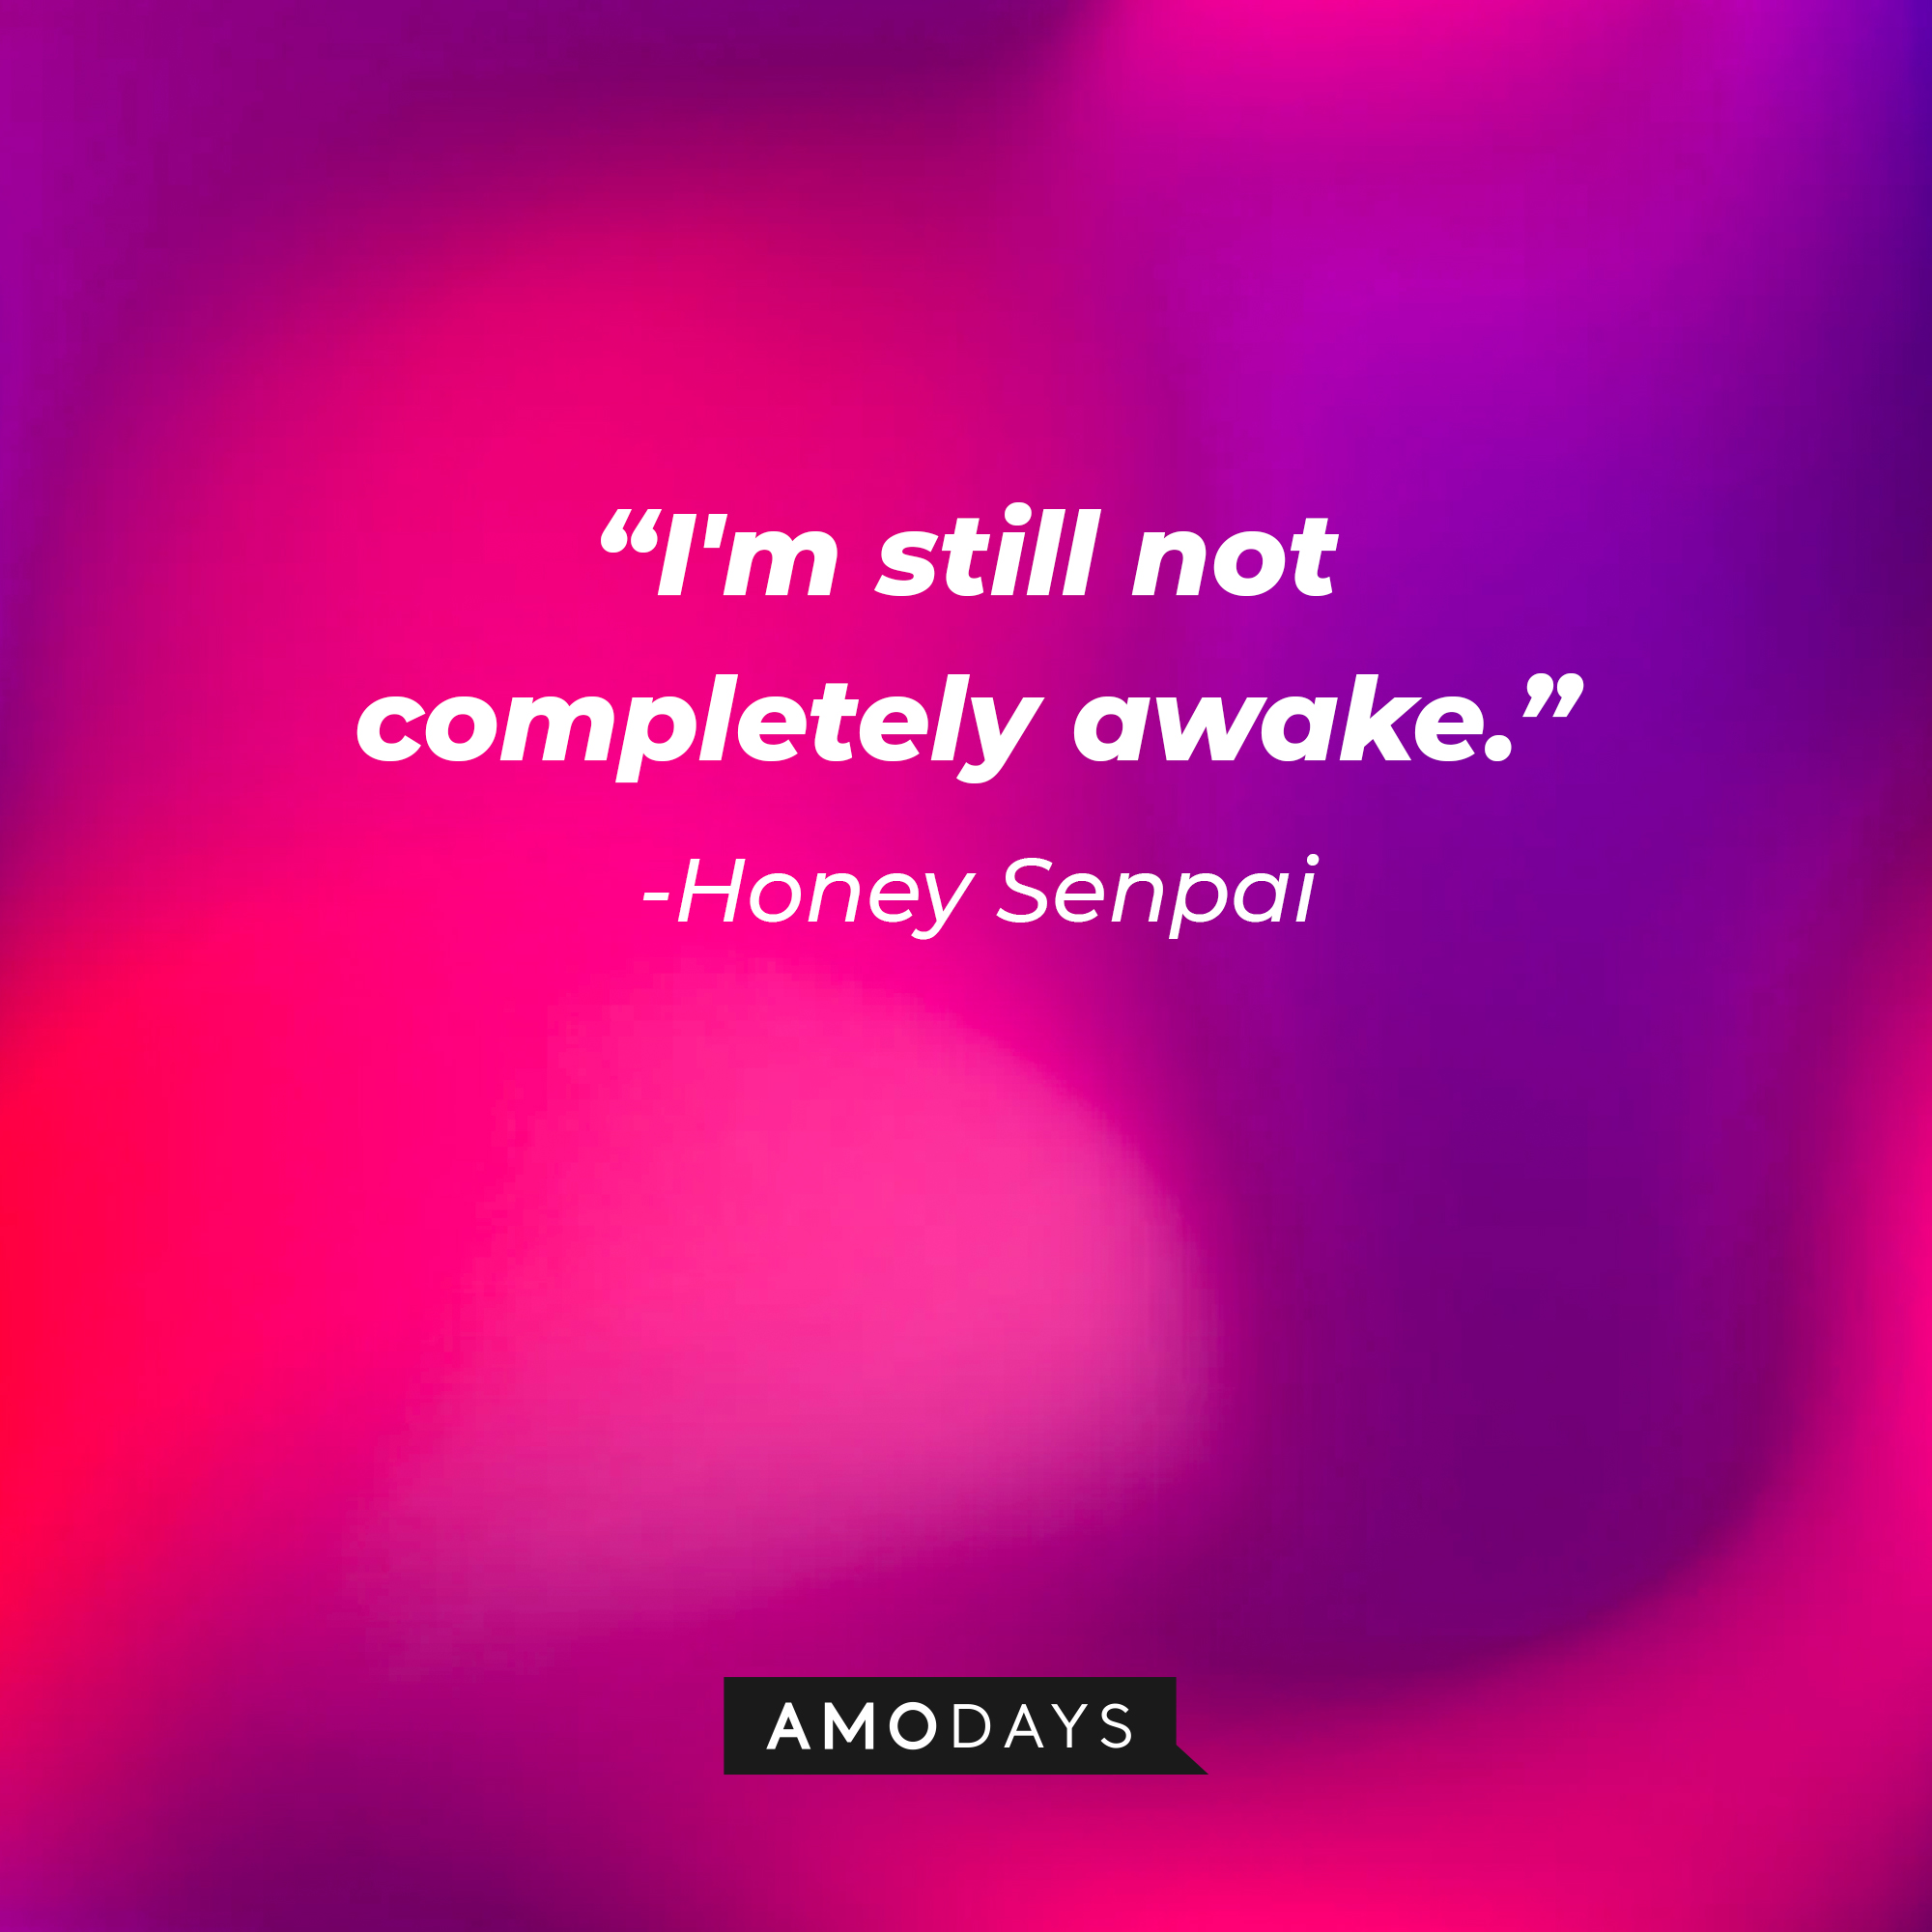 Honey Senpai’s quote: “I'm still not completely awake." | Source: AmoDays